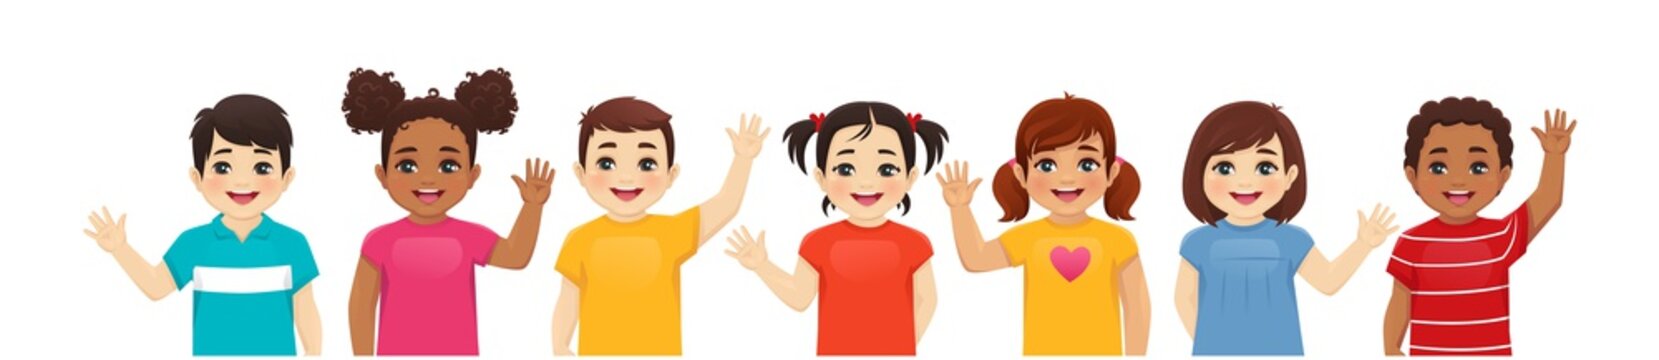 Smiling kids boys and girls waving hands set isolated vector illustration. Multiethnic little children.